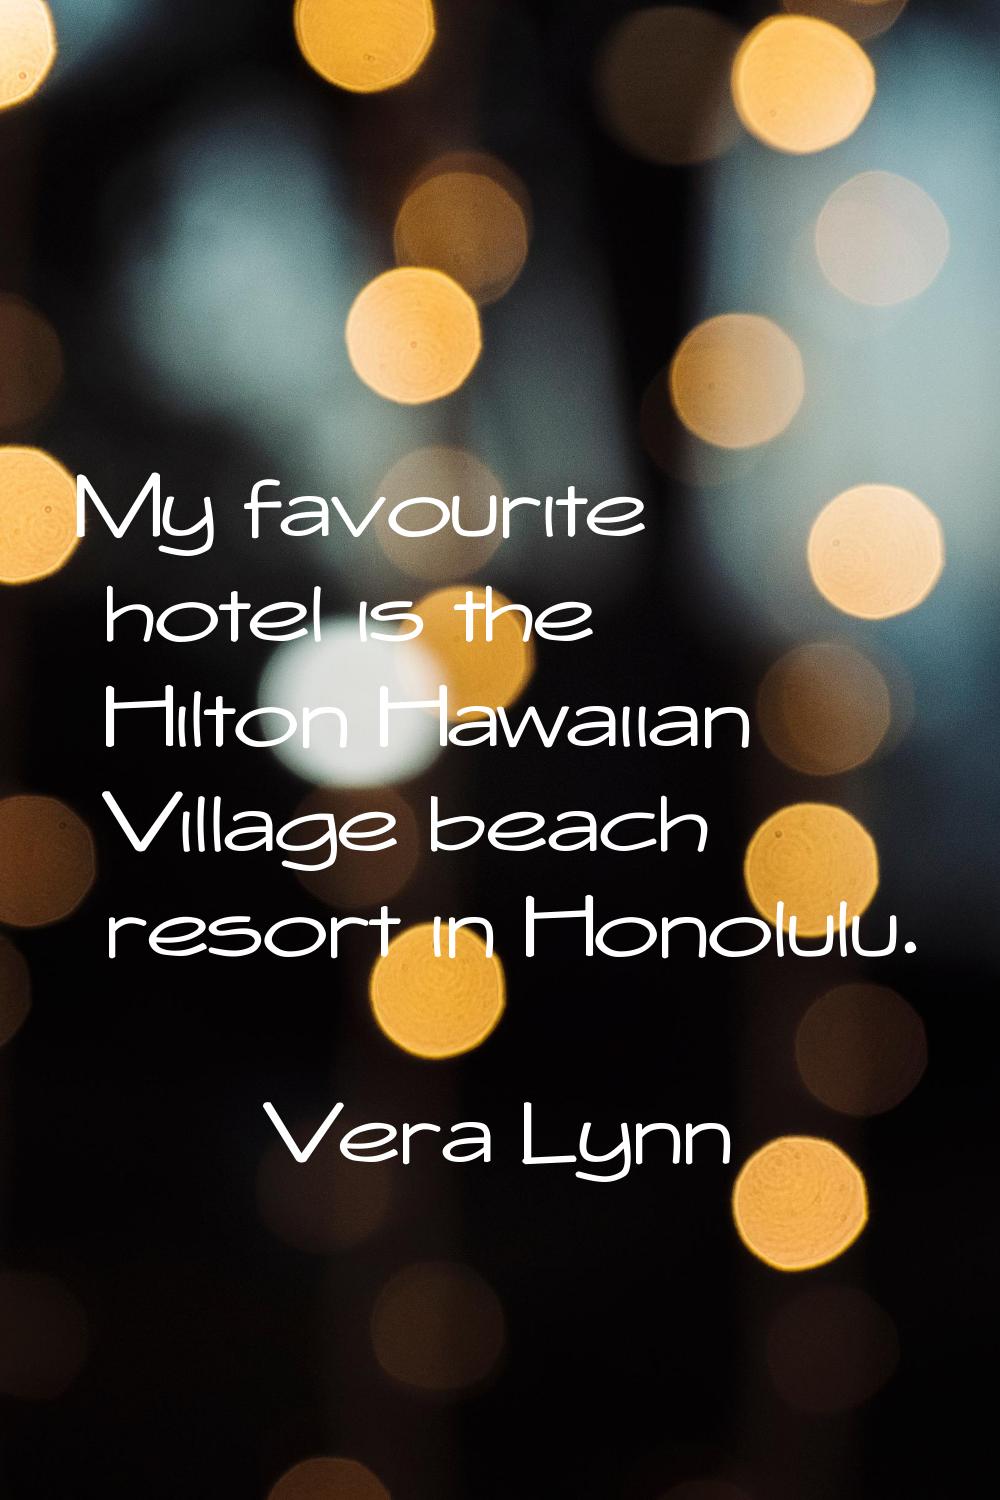 My favourite hotel is the Hilton Hawaiian Village beach resort in Honolulu.